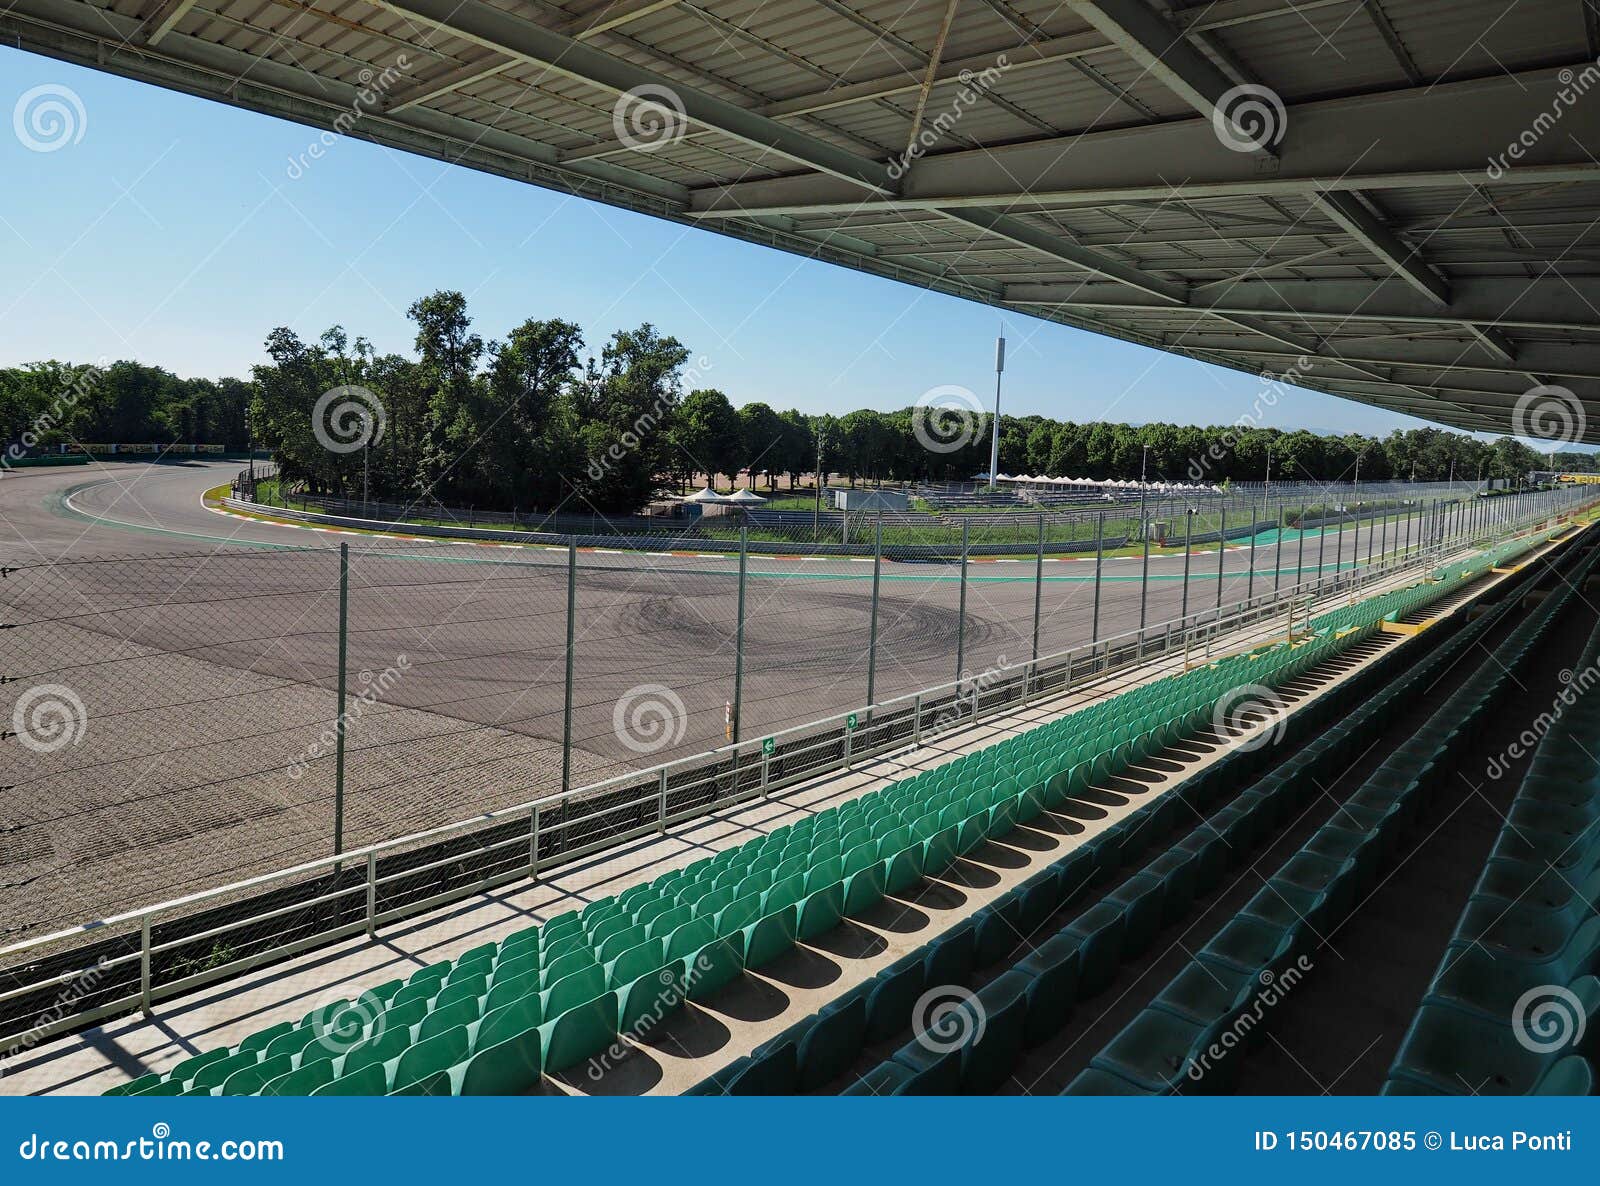 the autodromo nazionale monza, ascari variants. track located near the city of monza